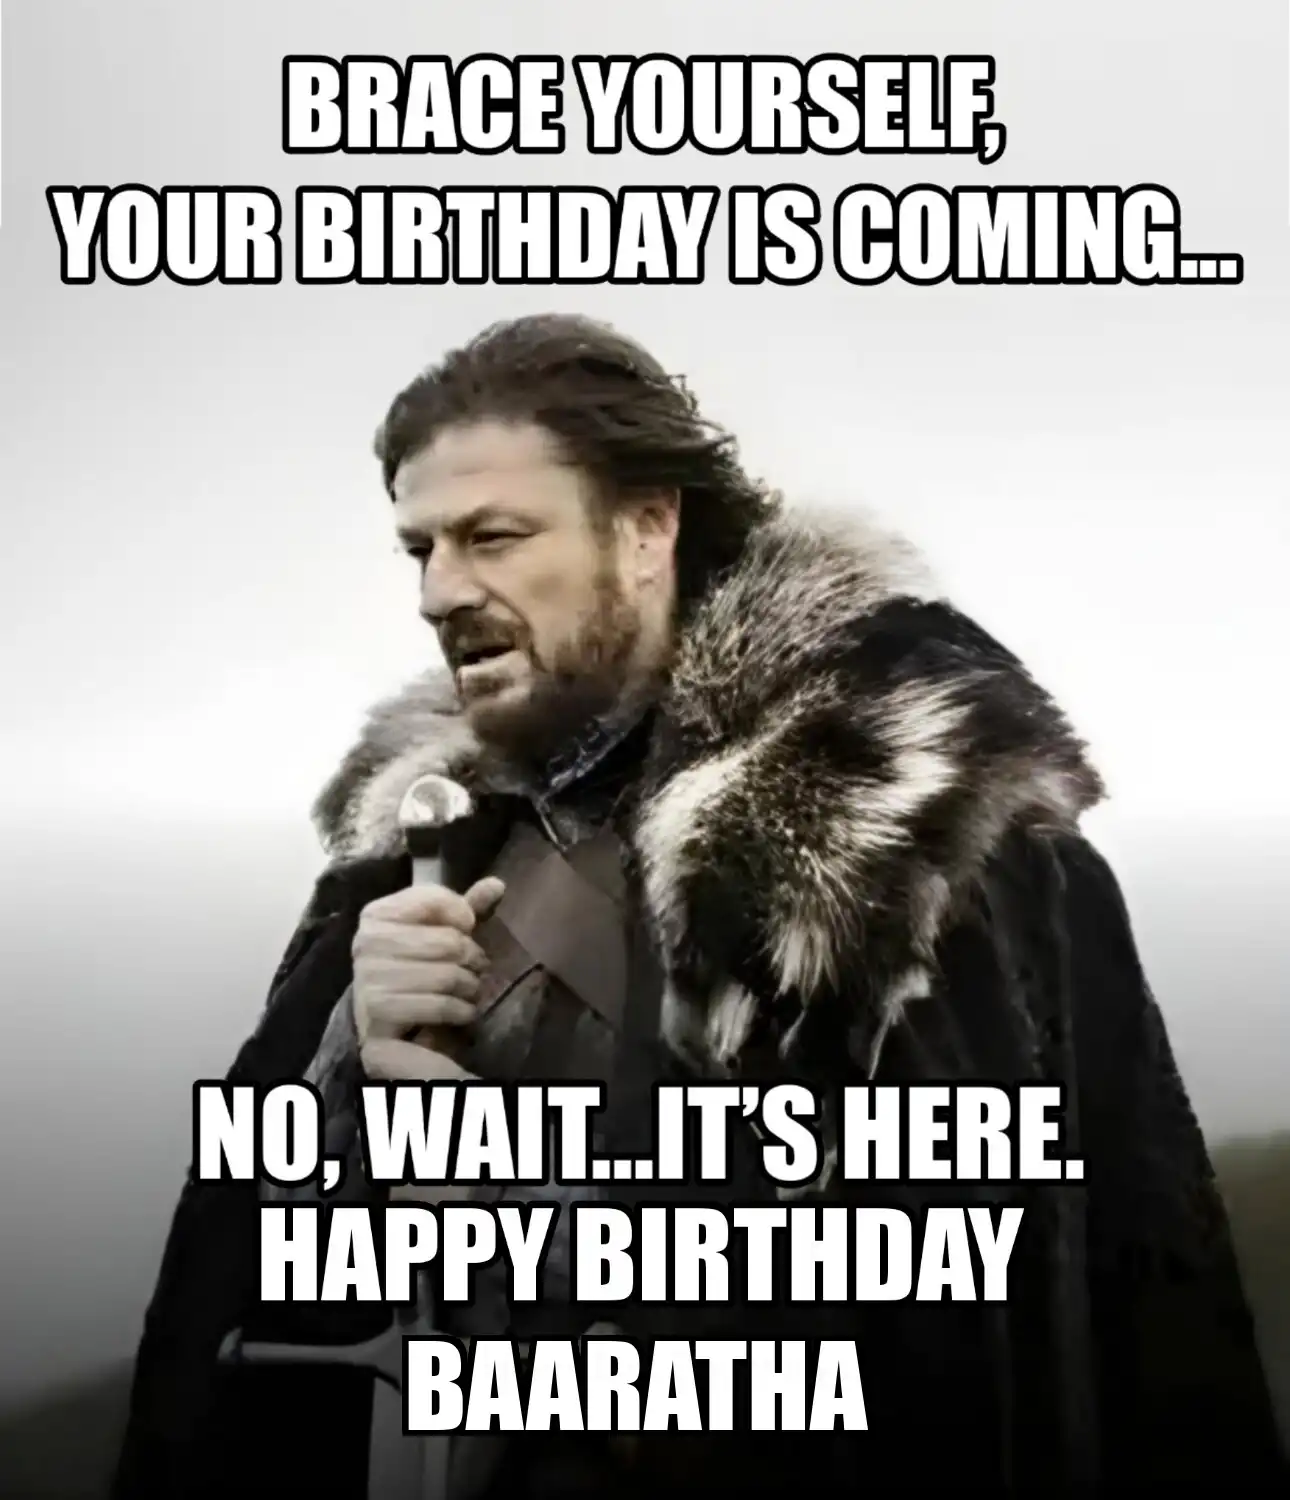 Happy Birthday Baaratha Brace Yourself Your Birthday Is Coming Meme